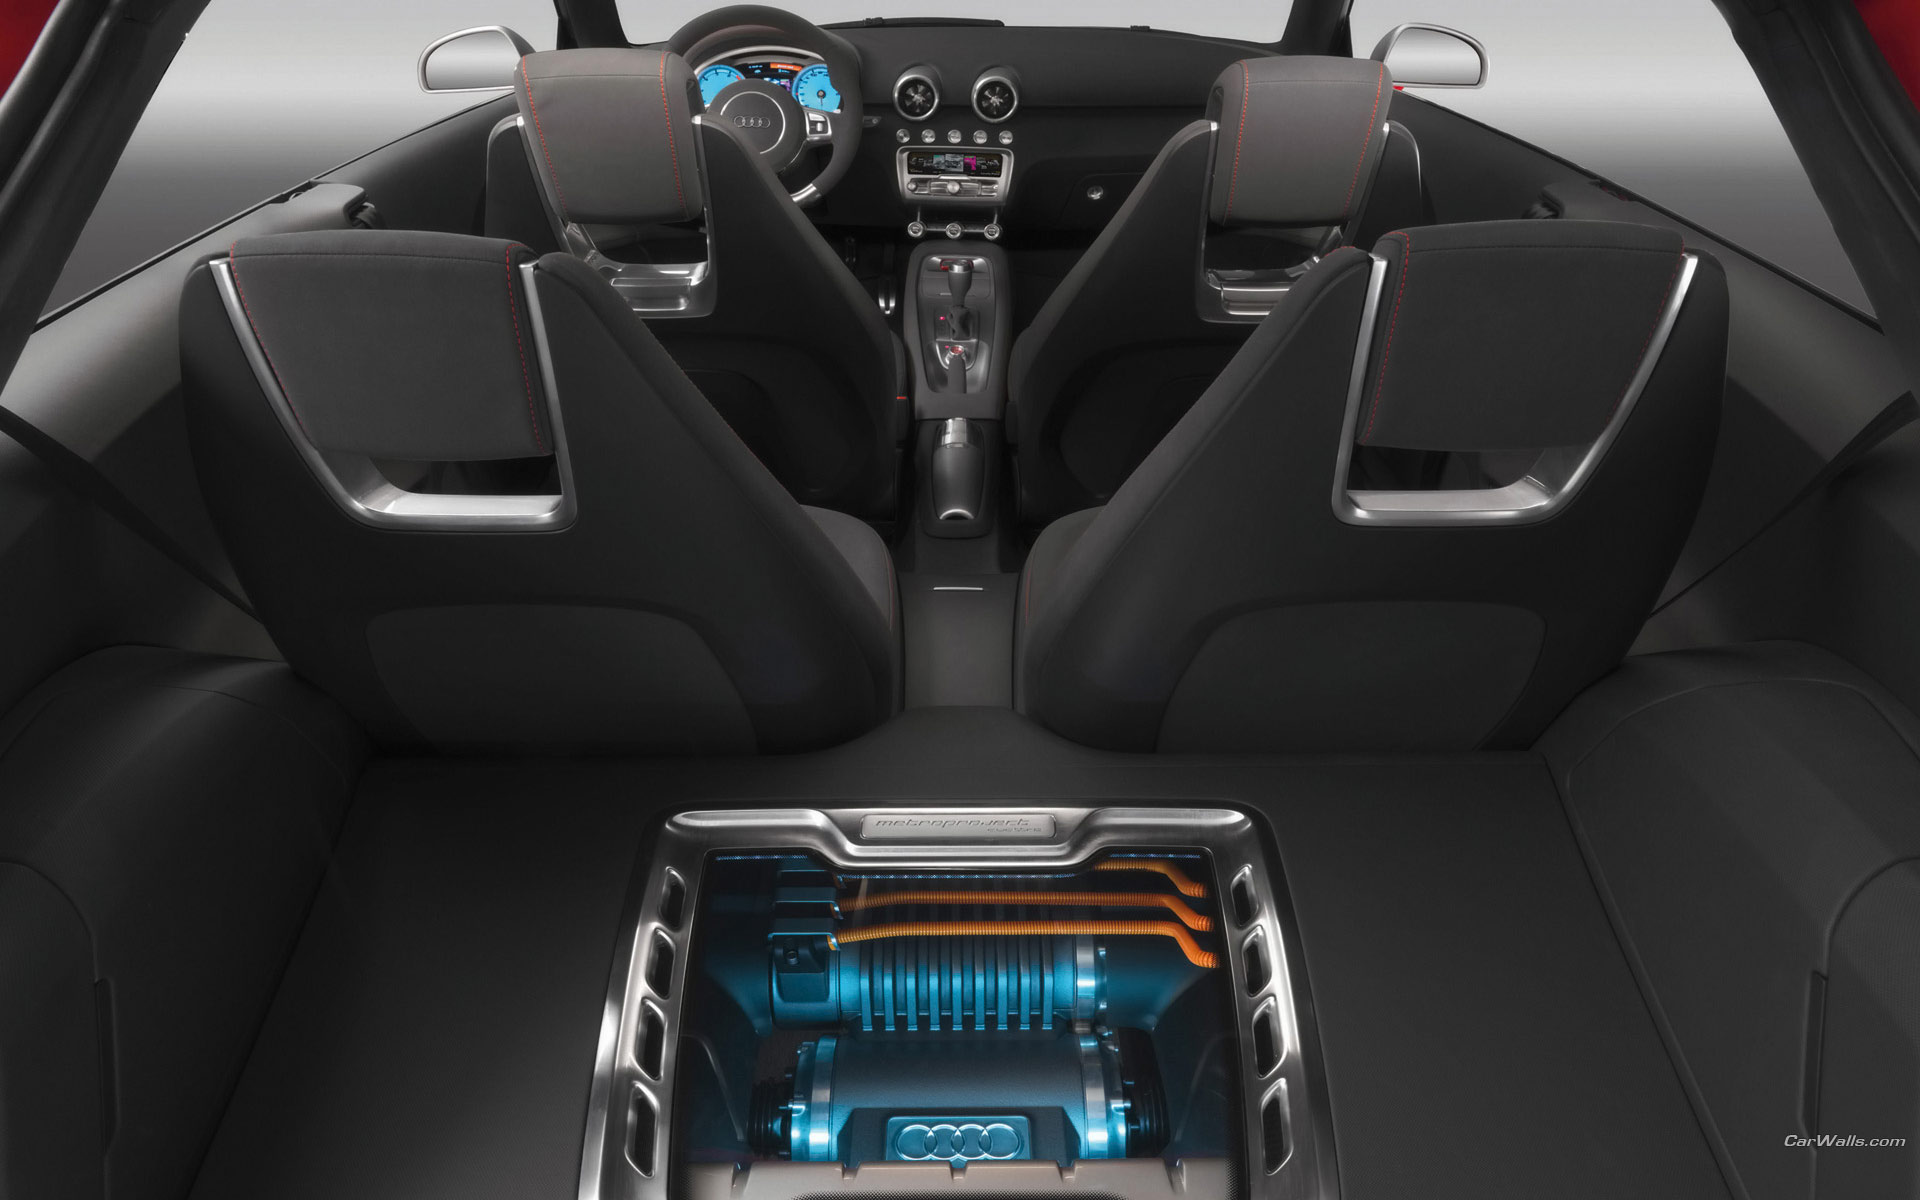 Download full size metroproject seat Audi wallpaper / 1920x1200